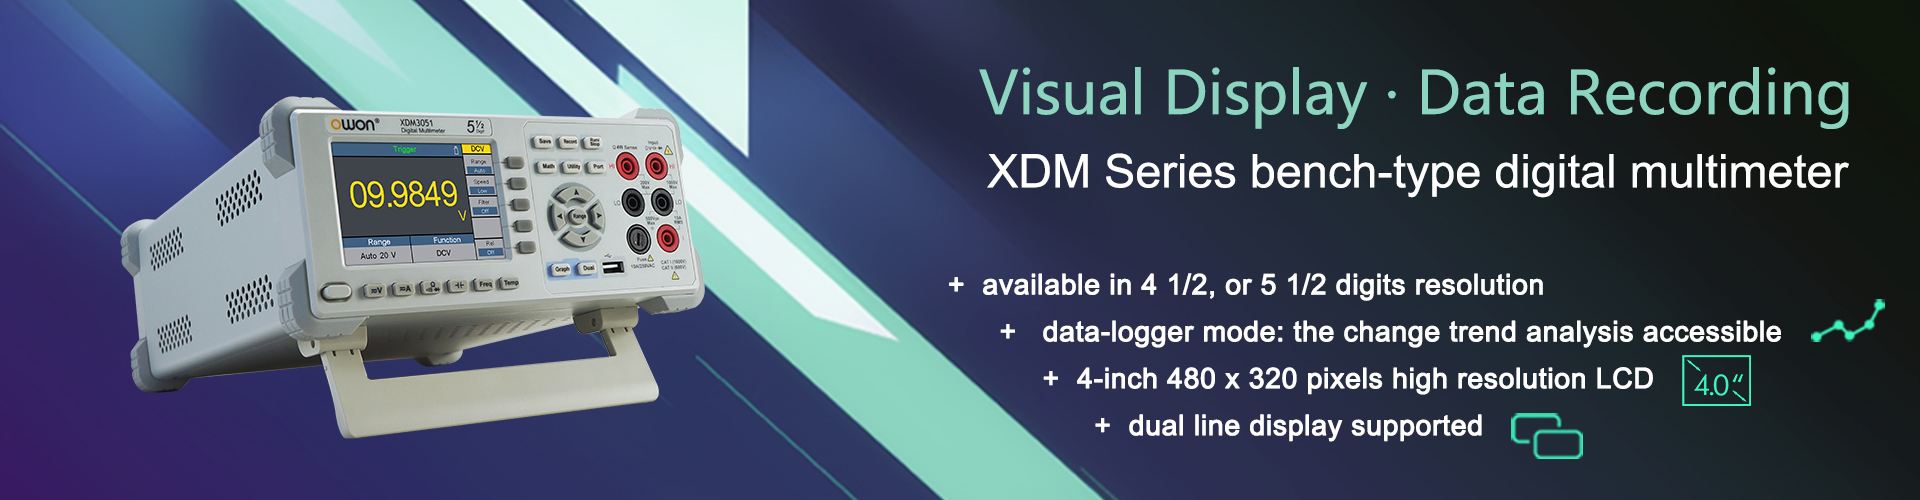 XDM Series bench-type digital multimeter